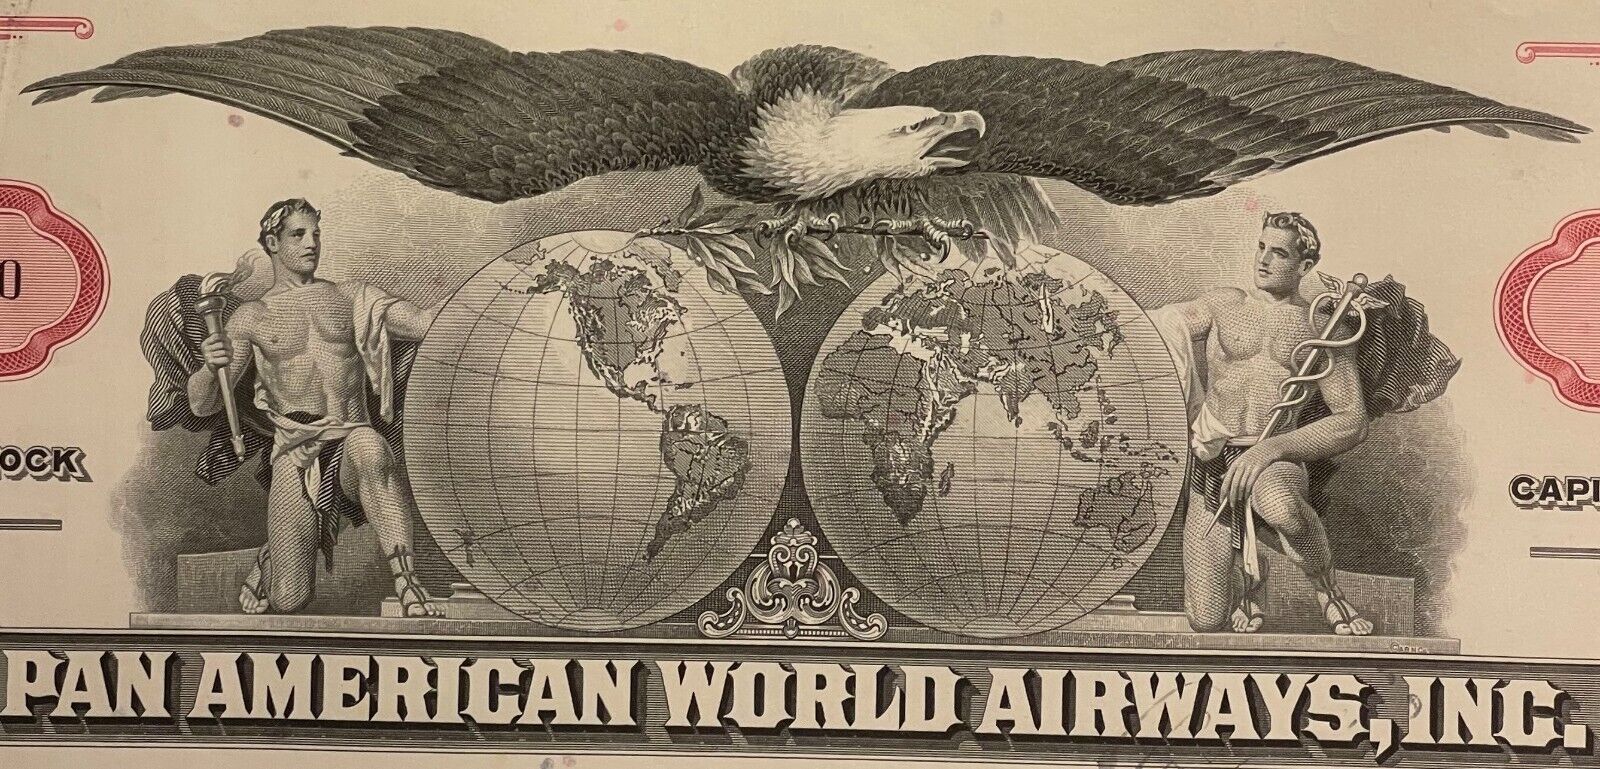 Vintage Pan Am American World Airways Stock Certificate 1960s American Icon RIP